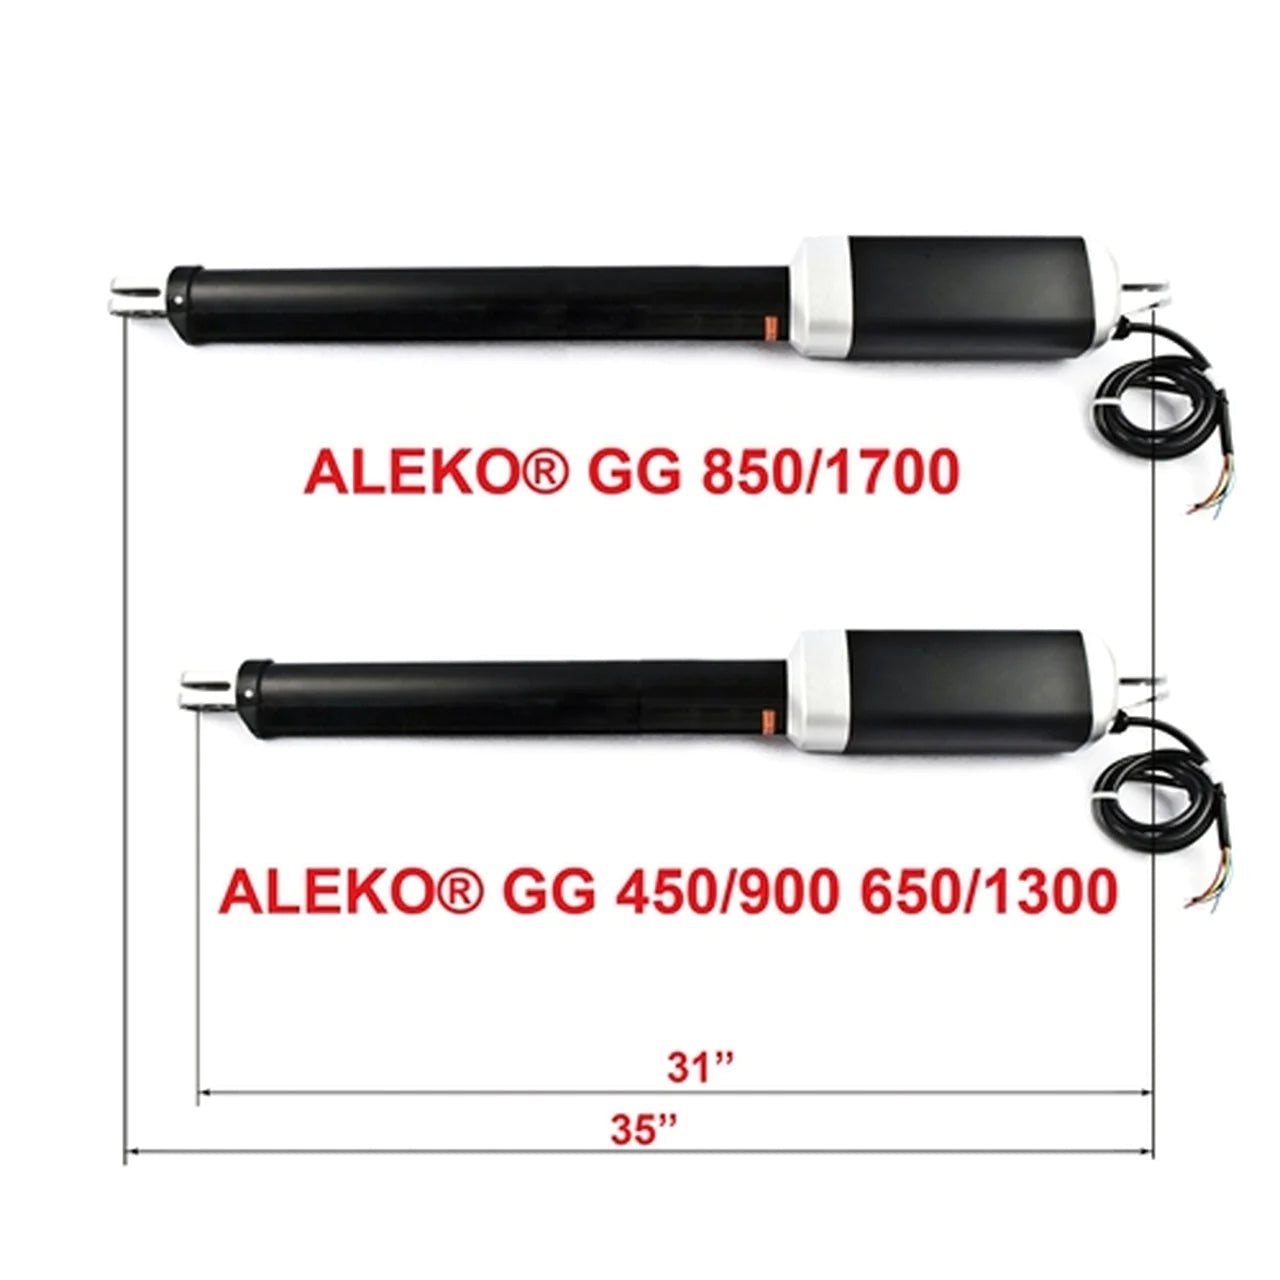 Aleko Actuator For Swing Gate Opener - GG450/900 Series